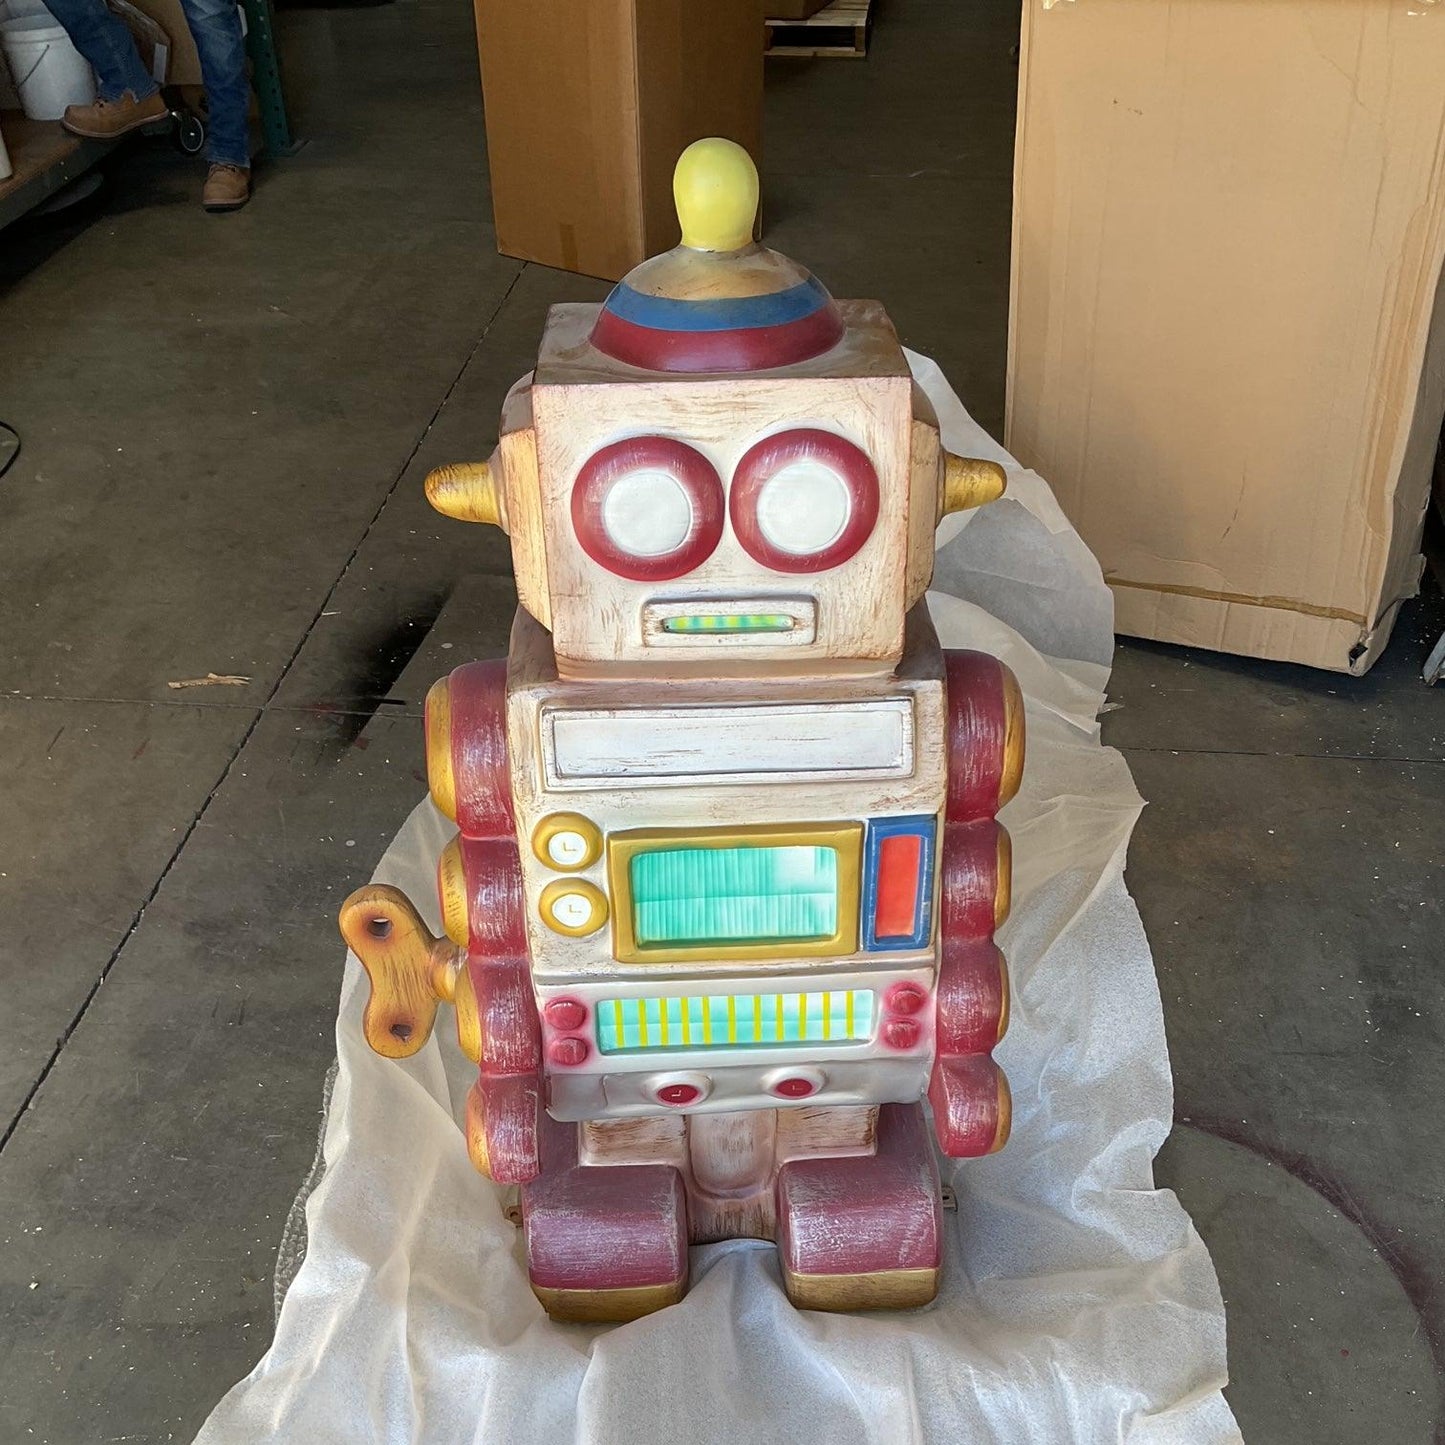 Toy Robot Over Sized Statue - LM Treasures Prop Rentals 